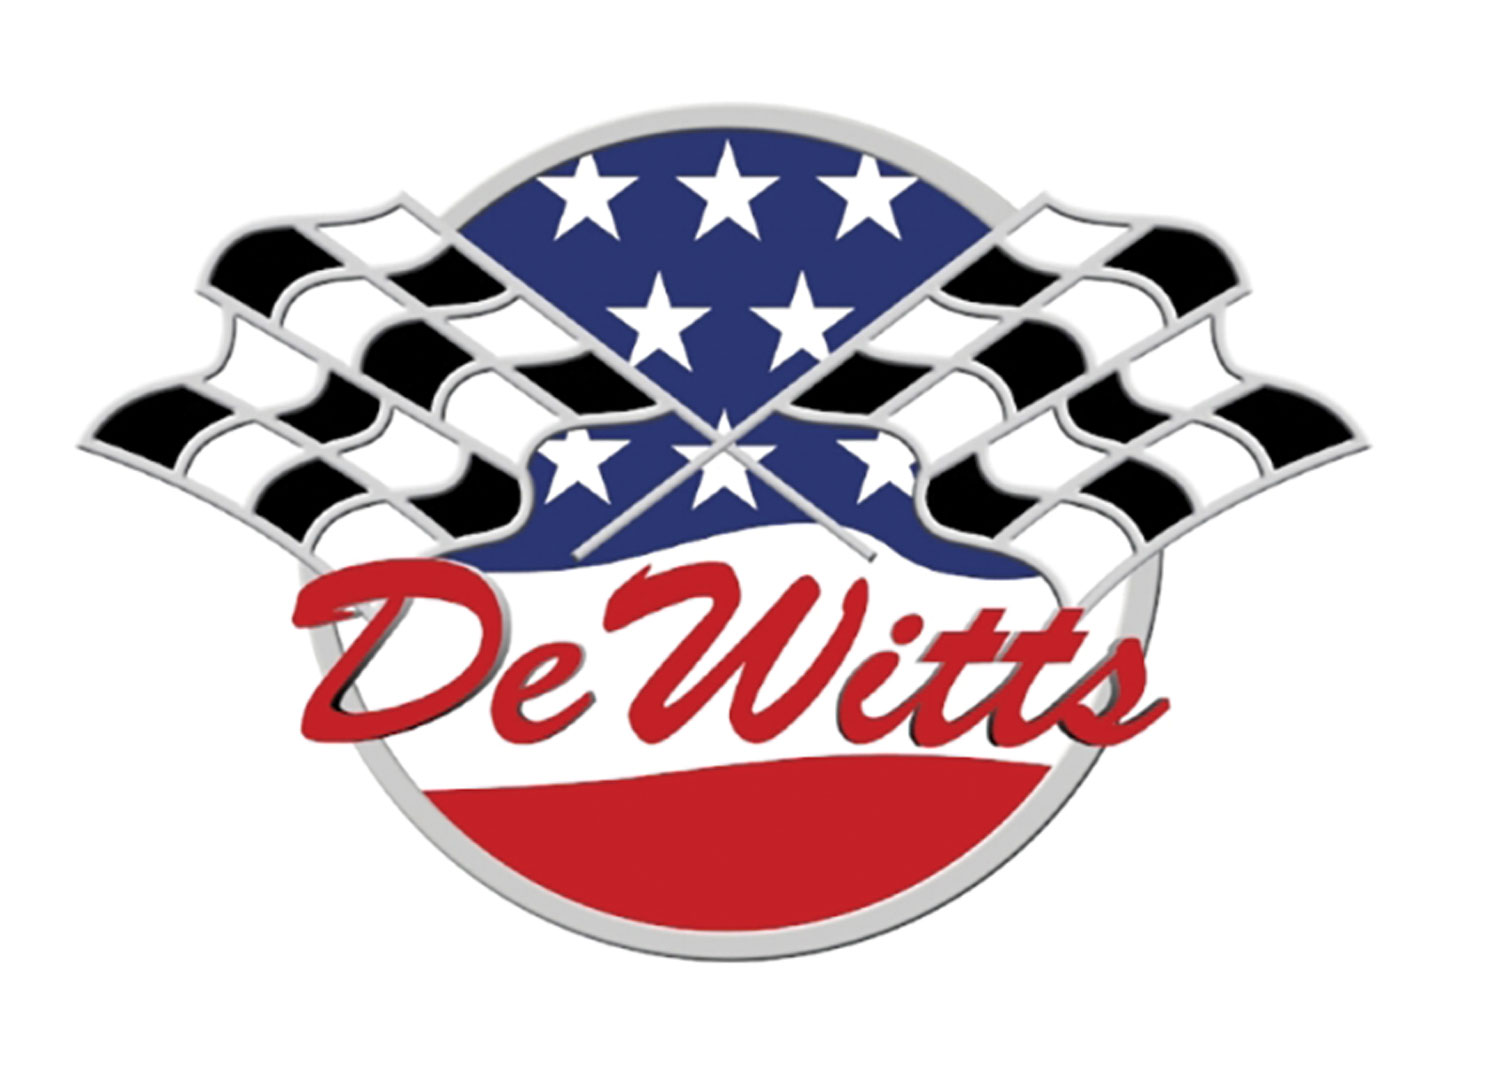 Dewitt's Corvettes logo